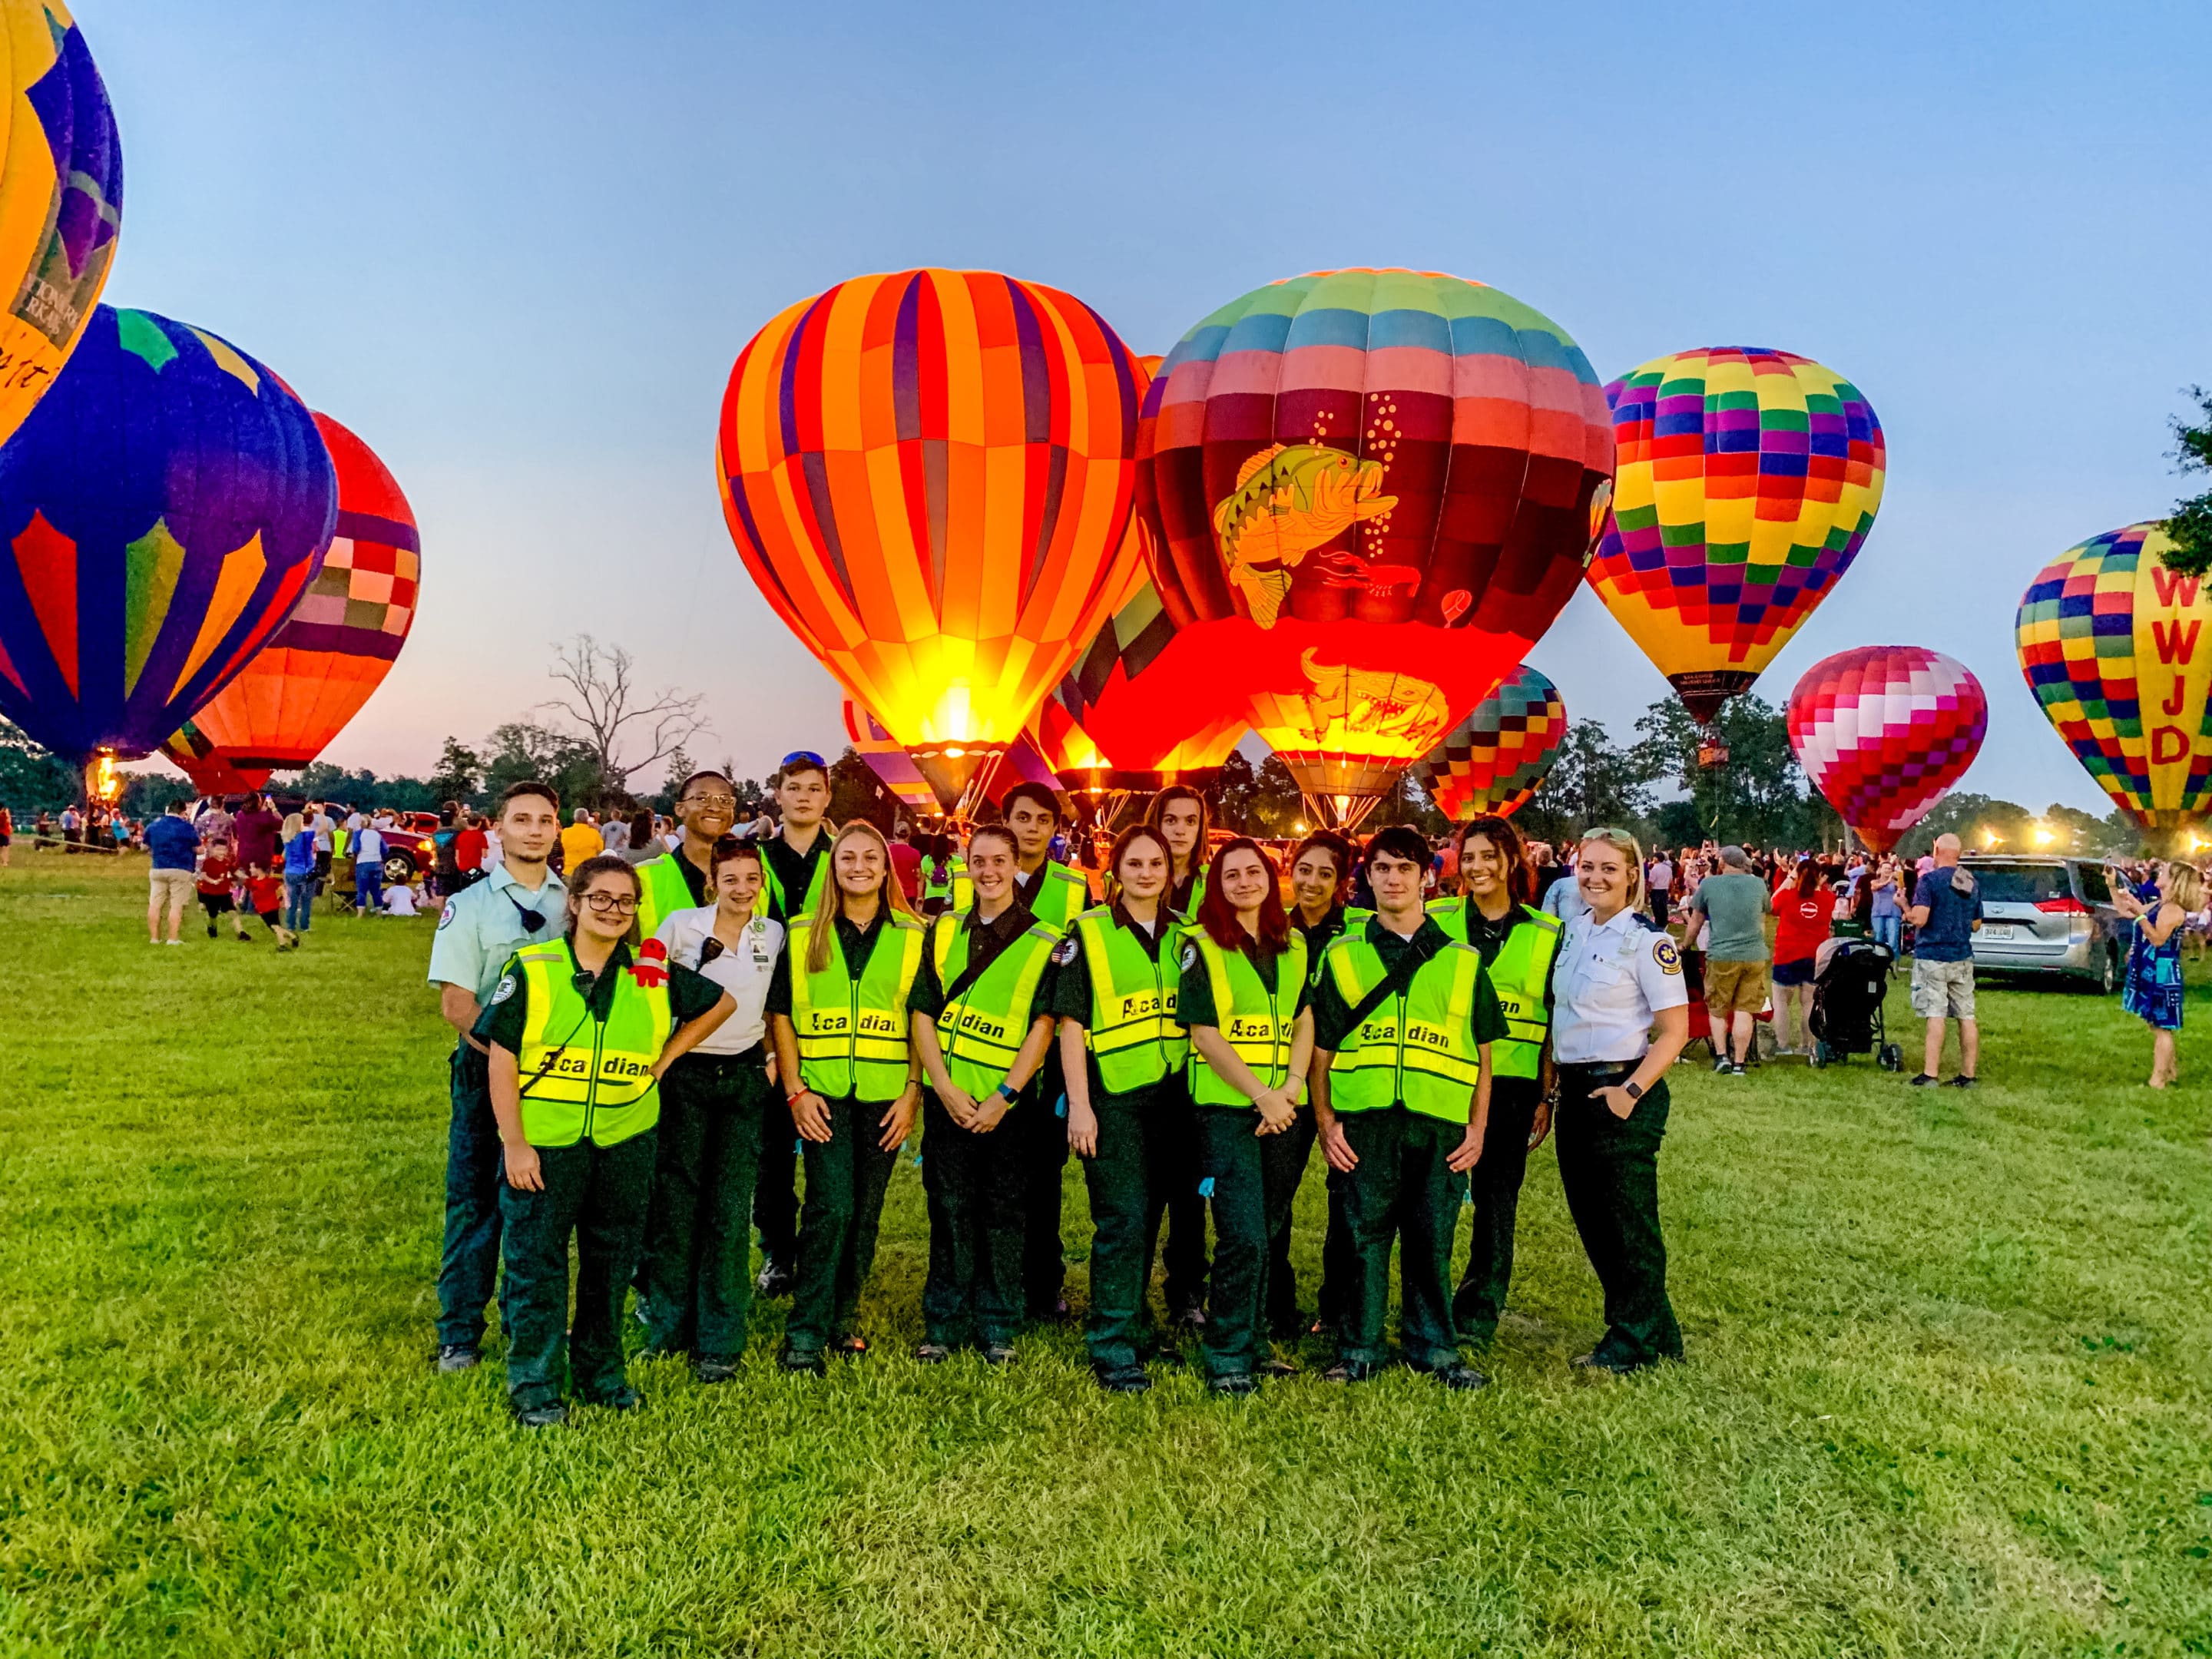 acadian ambulance team at hot air balloon fest